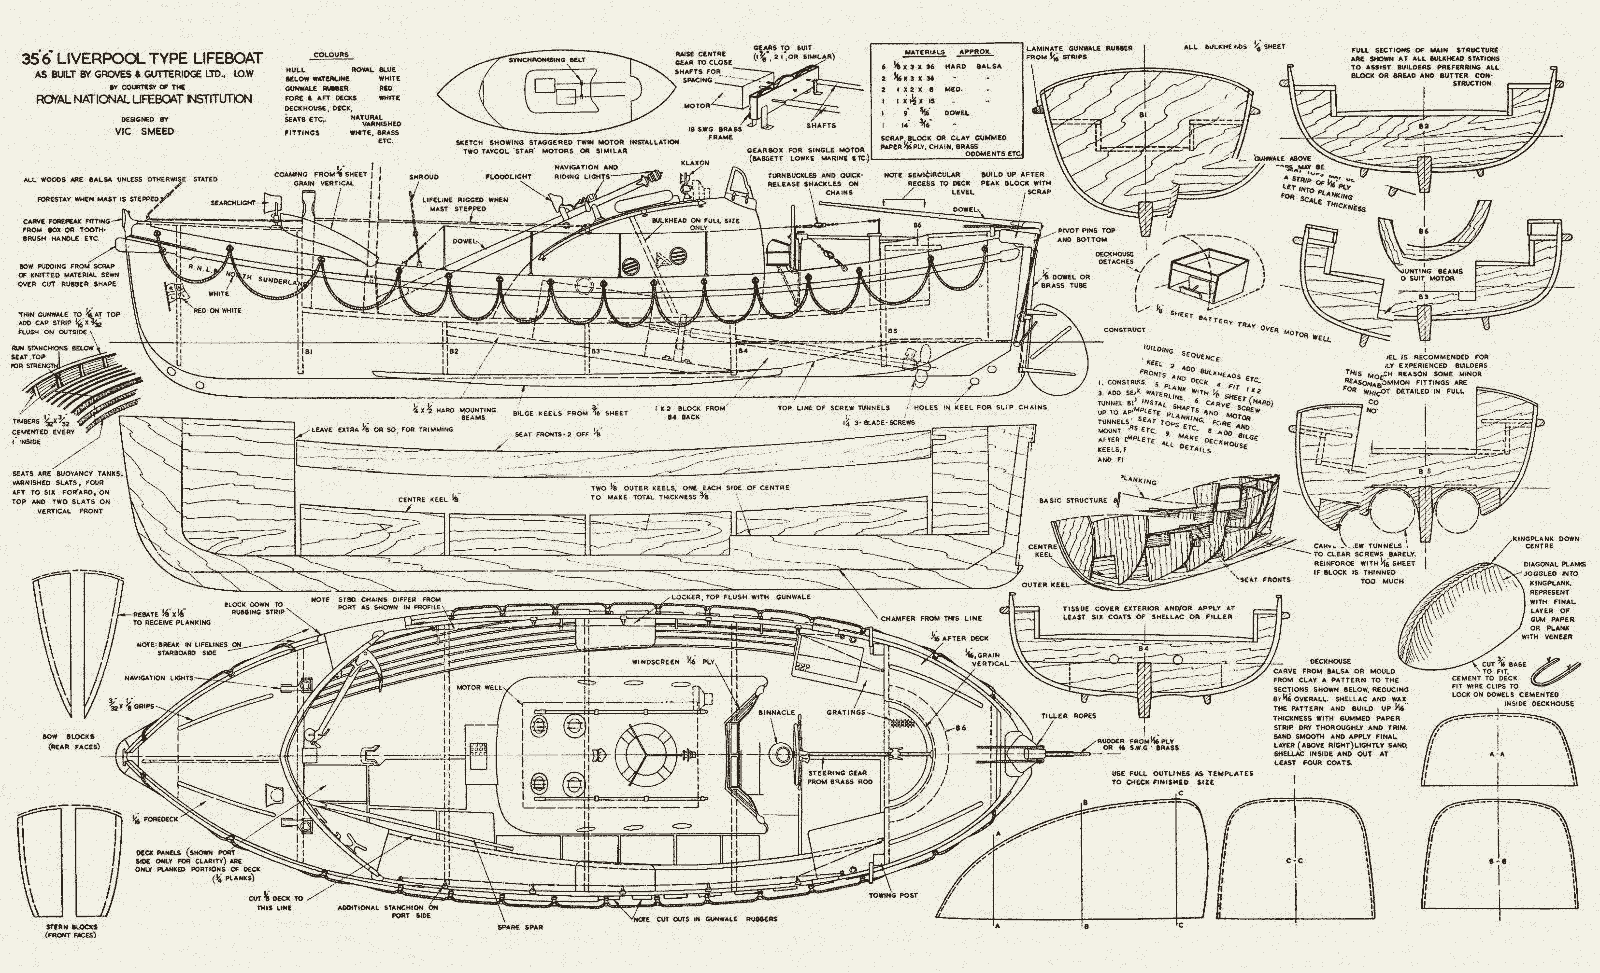 Liverpool-class lifeboat blueprint